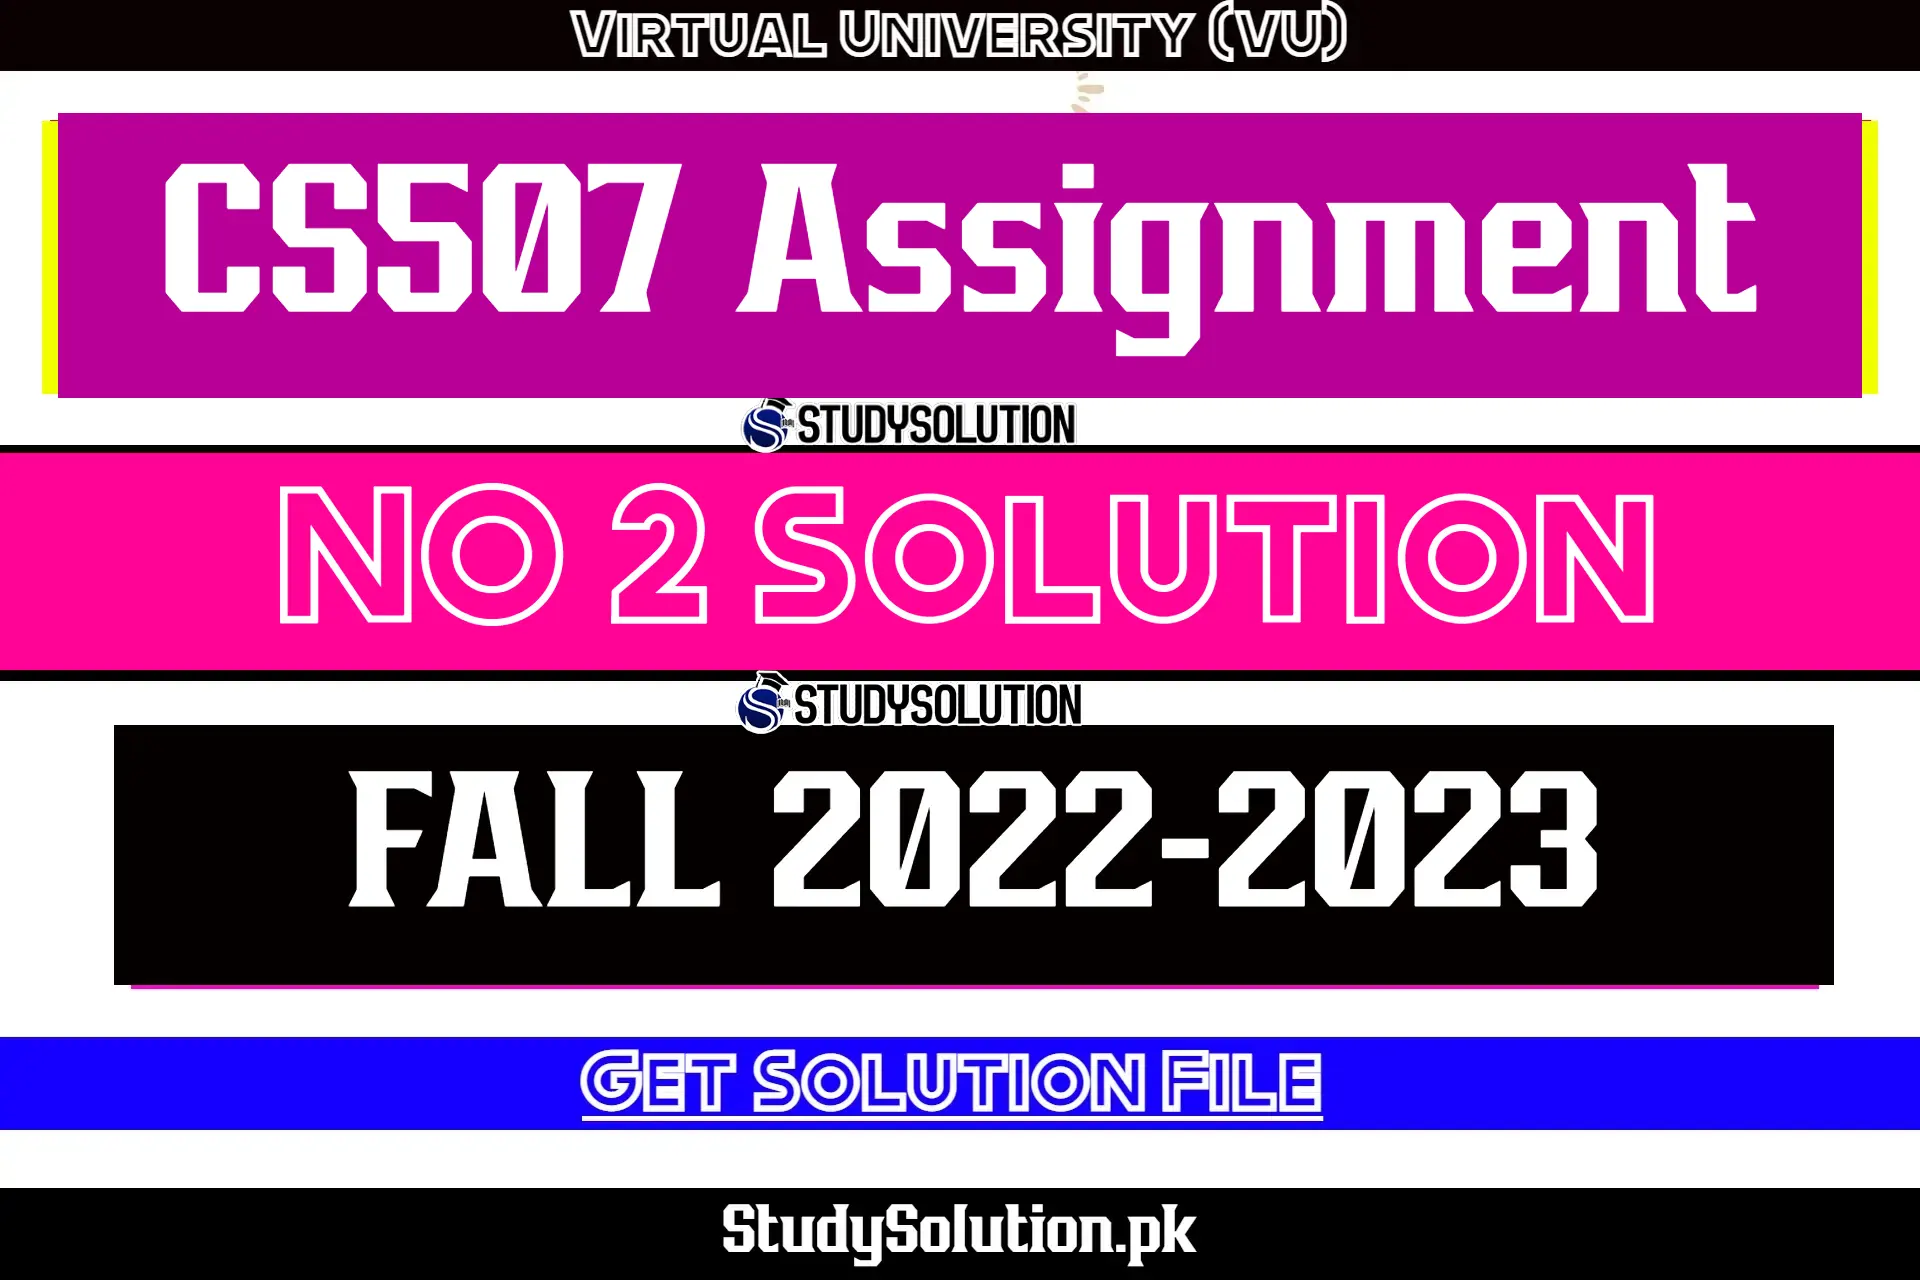 CS507 Assignment No 2 Solution Fall 2022